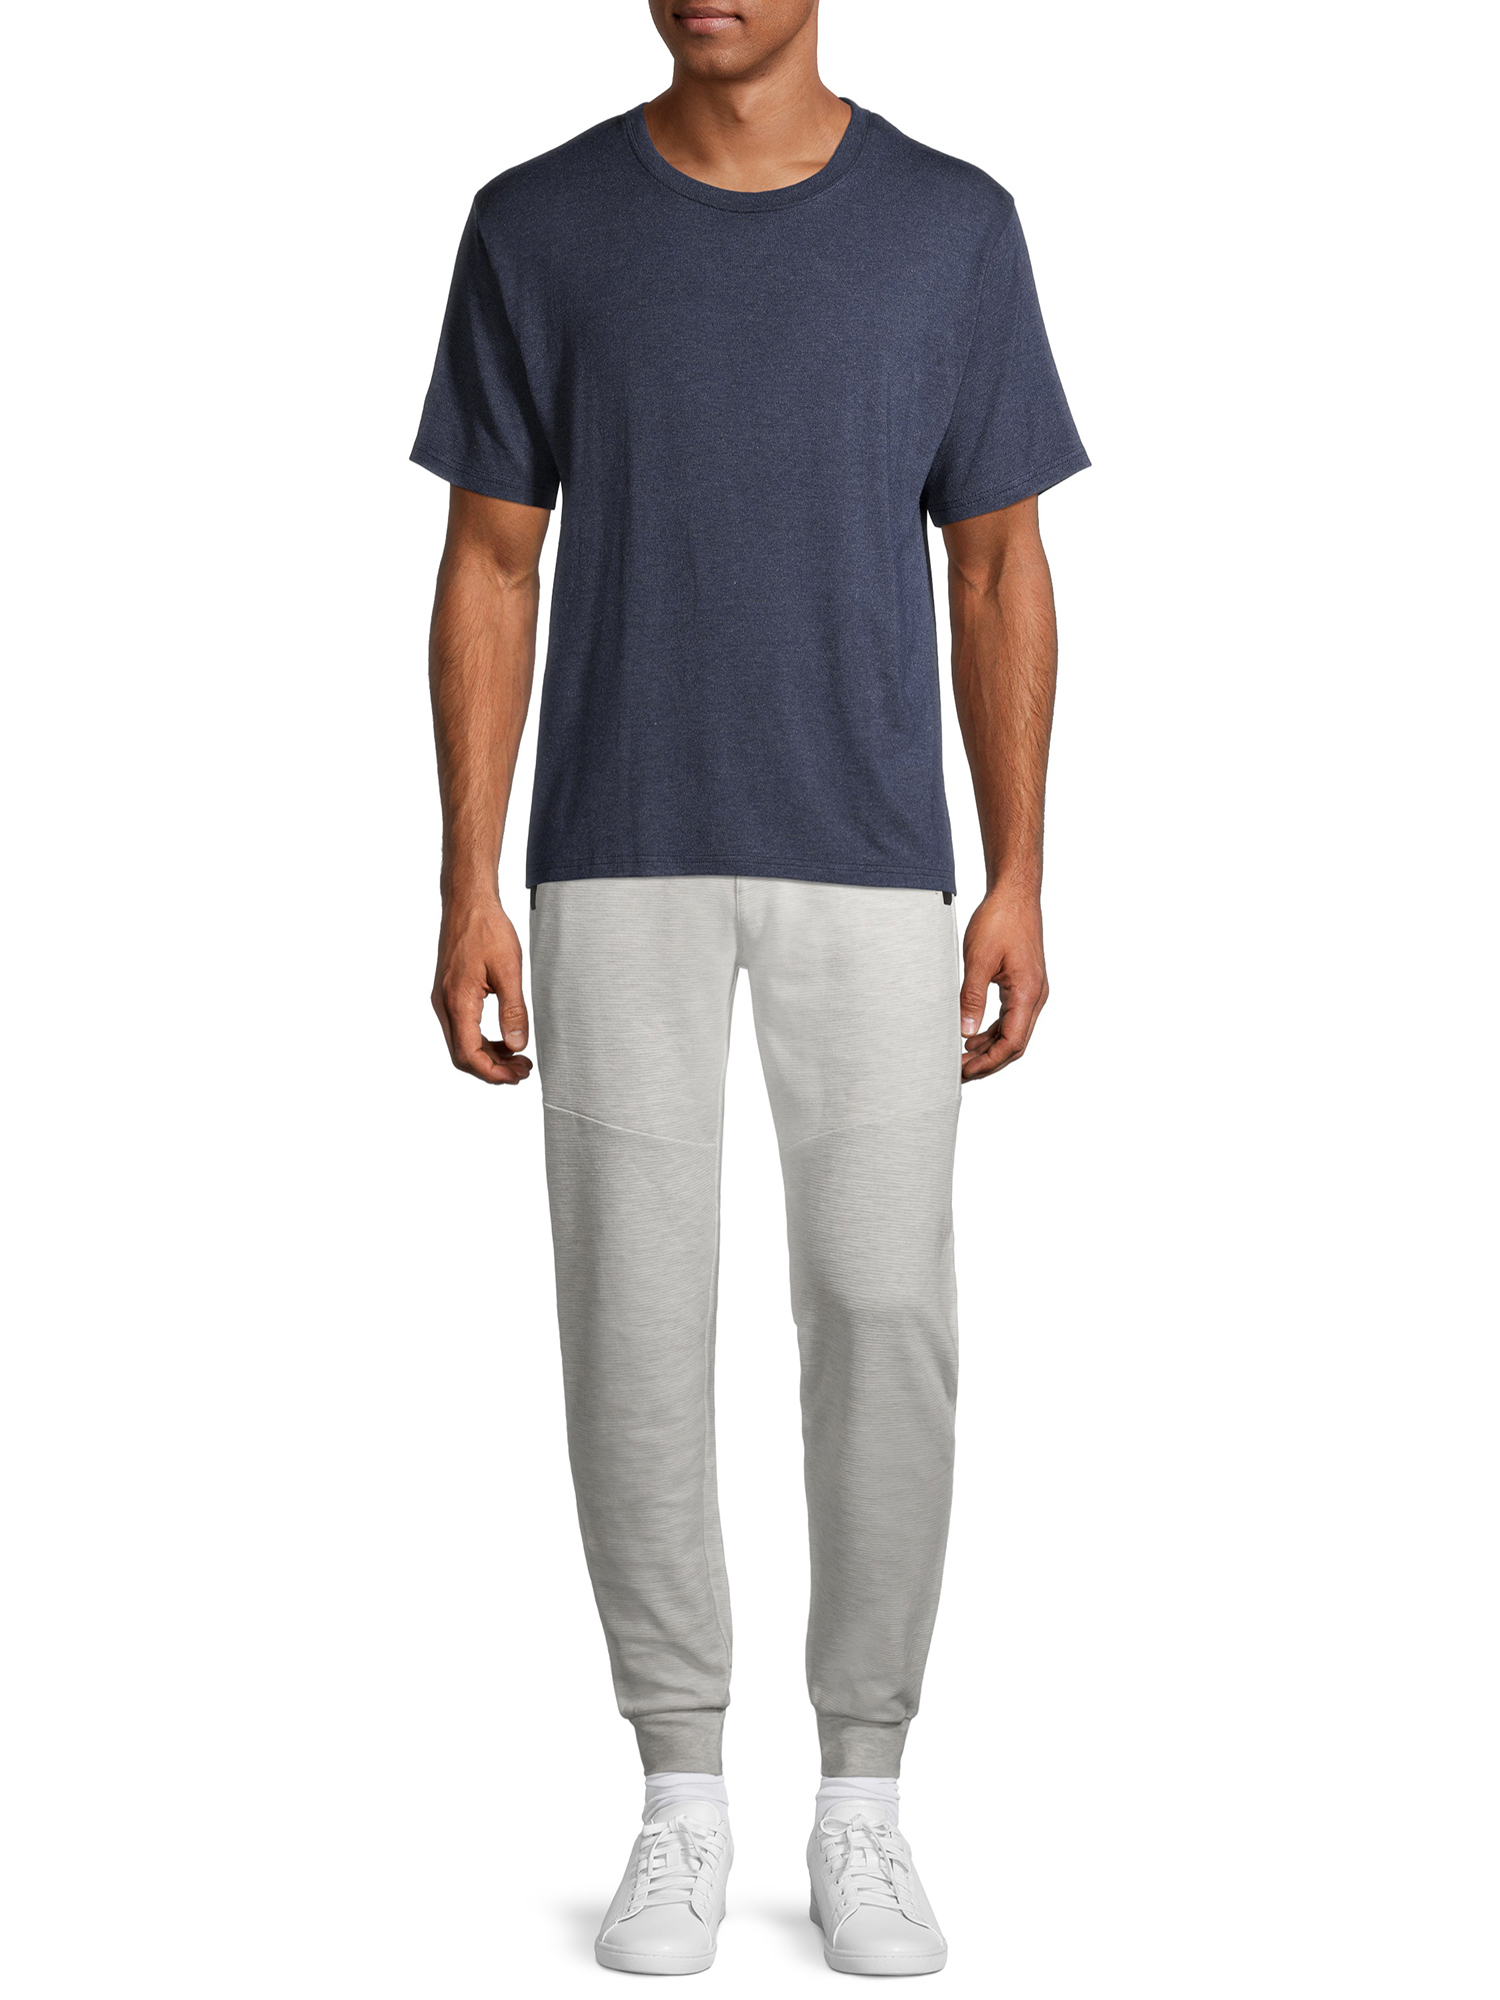 Hanes Men’s Ultrasoft Modal Stretch Cozy Pajama Shorts